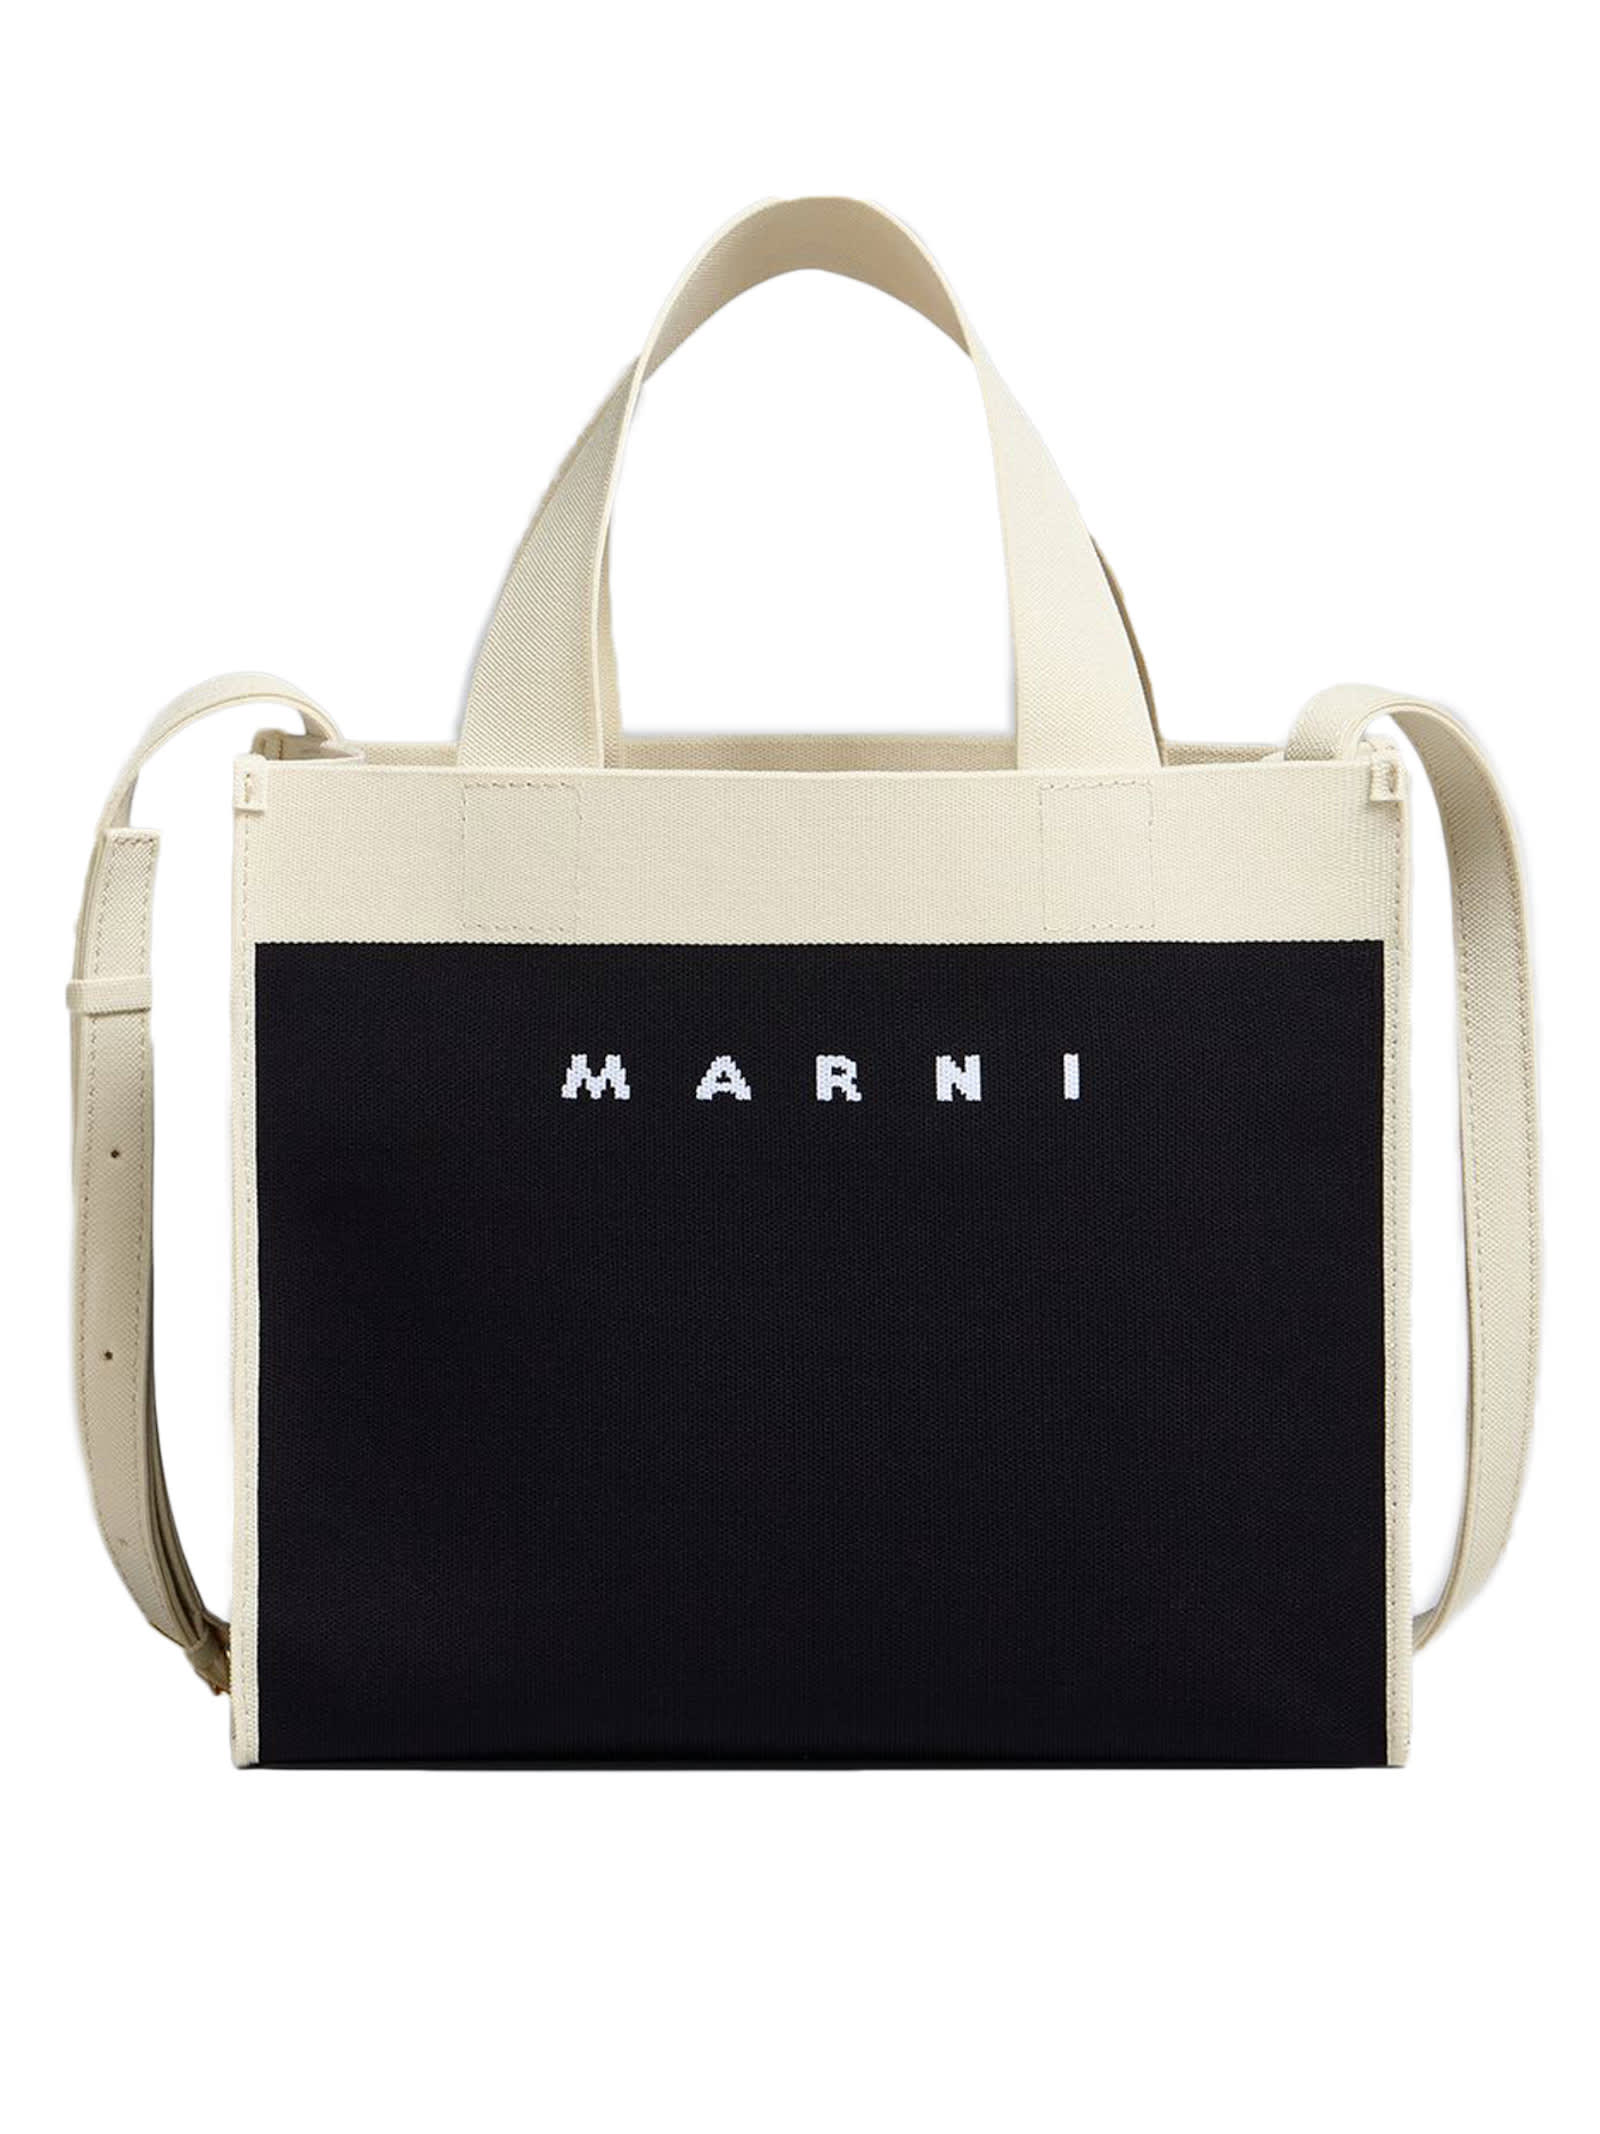 Marni Small Shopping Bag In Black And White Jacquard